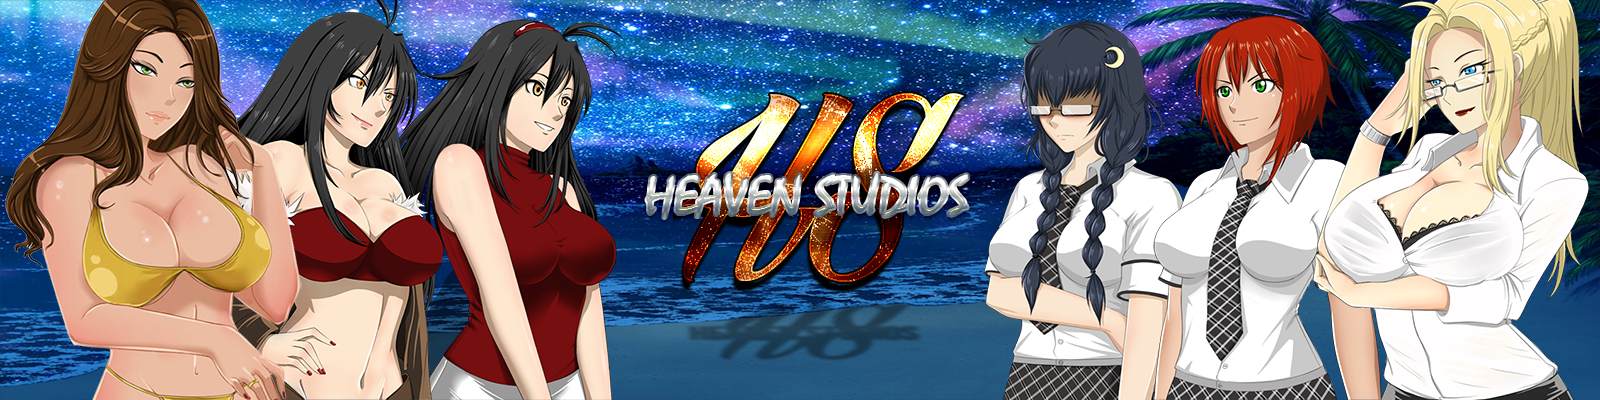 Alansya Chronicles Fleeting Iris Heaven Studios Adult xxx Game Download